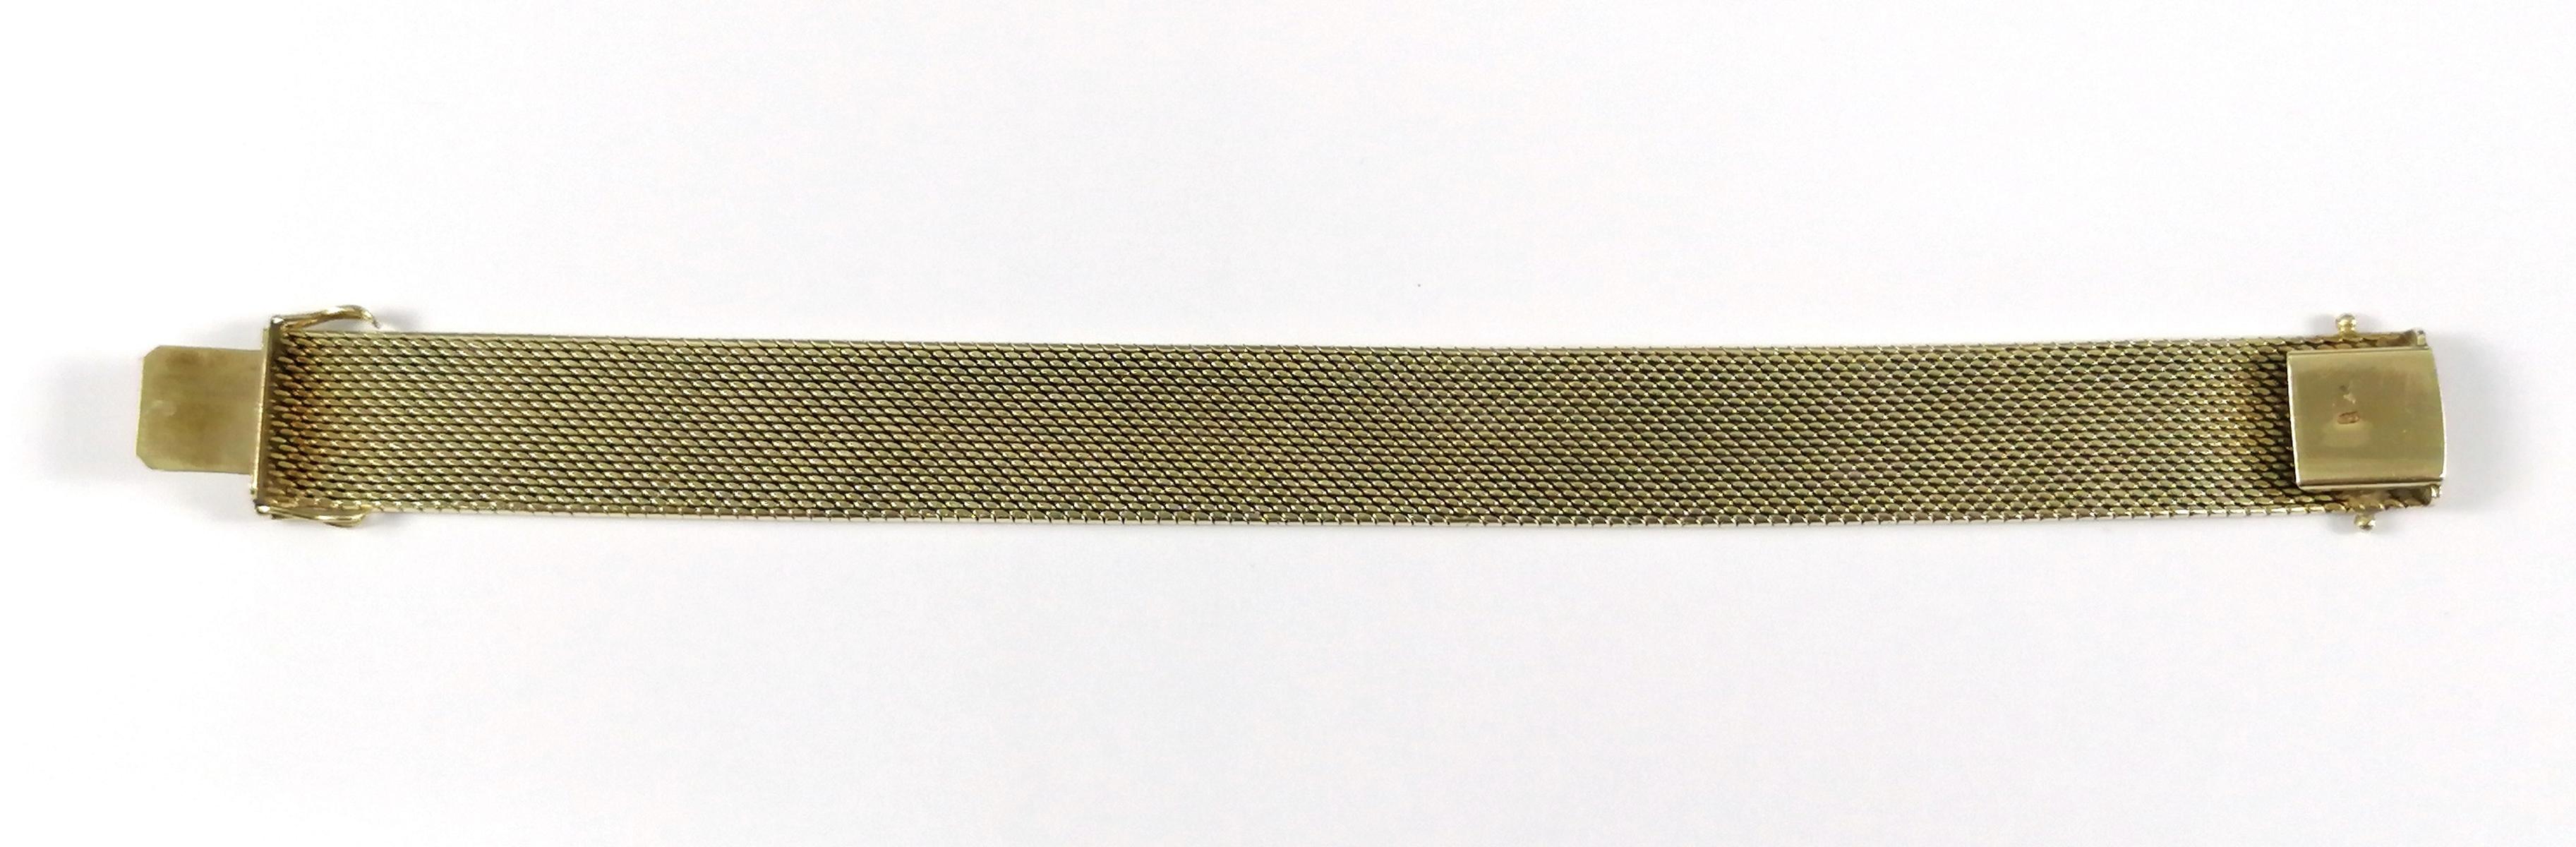 Breites Damenarmband aus 14 kt Gelbgold - Image 2 of 3